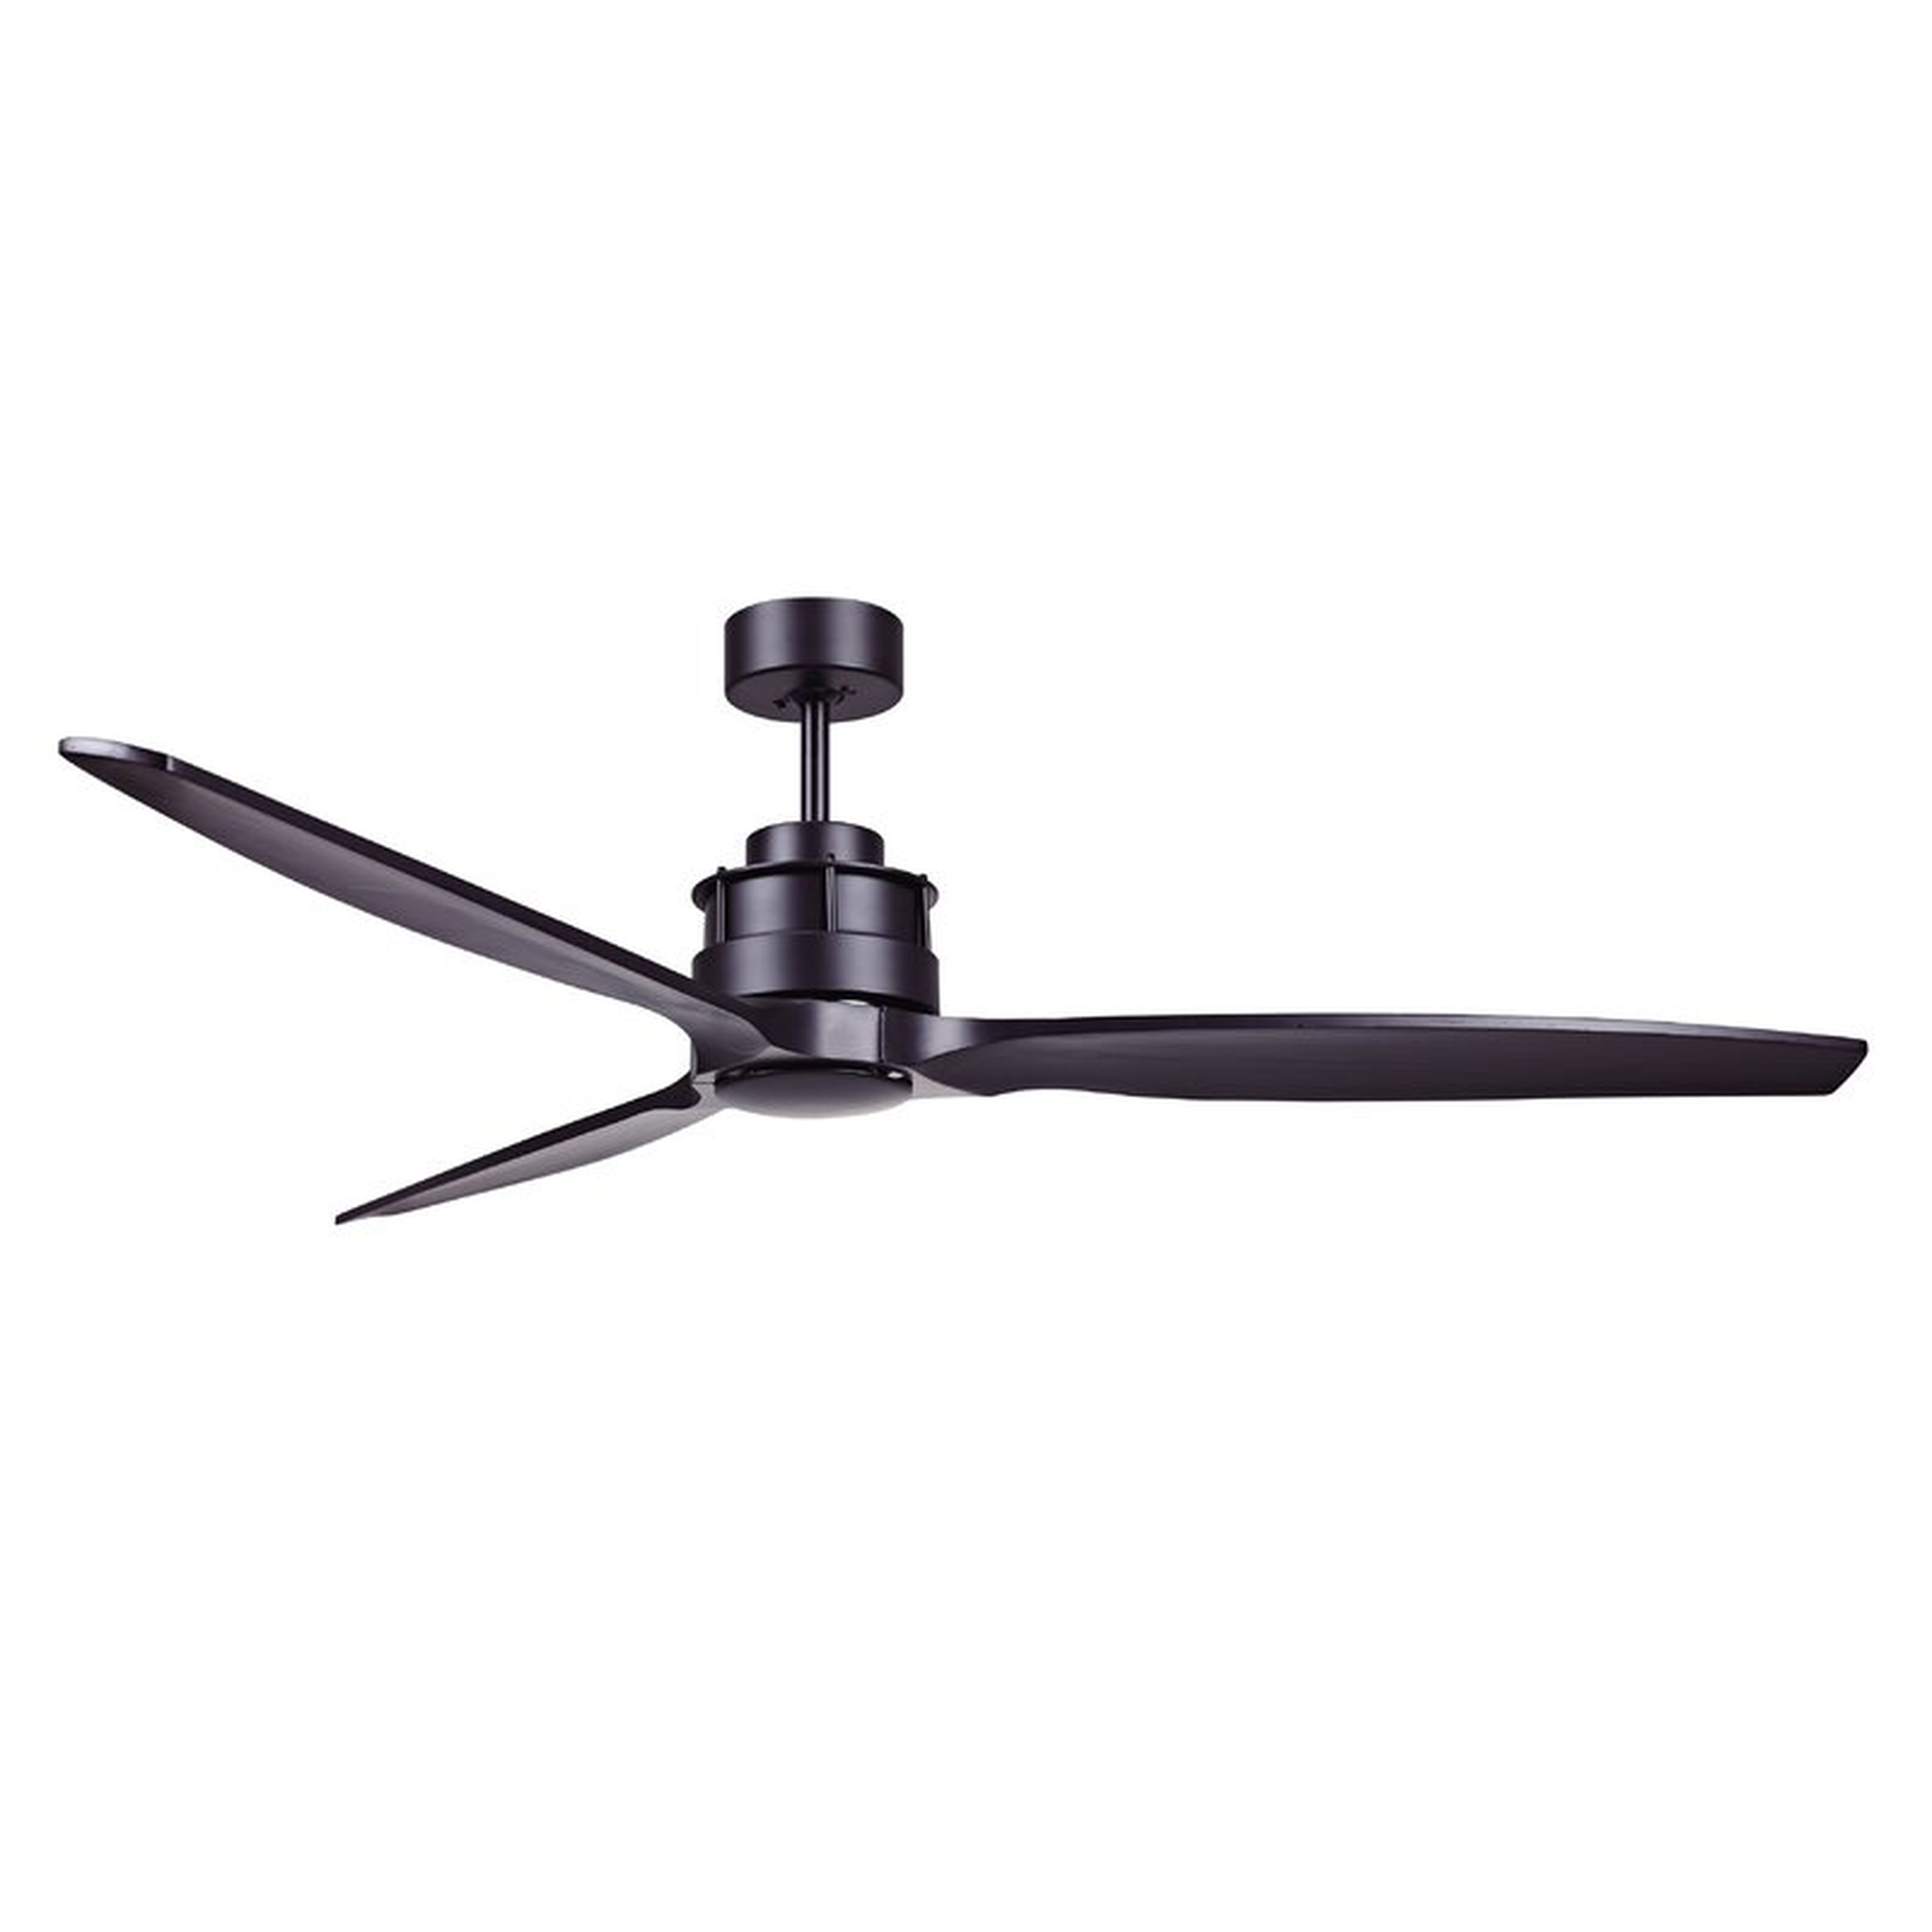 60" Adamski 3 - Blade Propeller Ceiling Fan with Remote Control - Wayfair